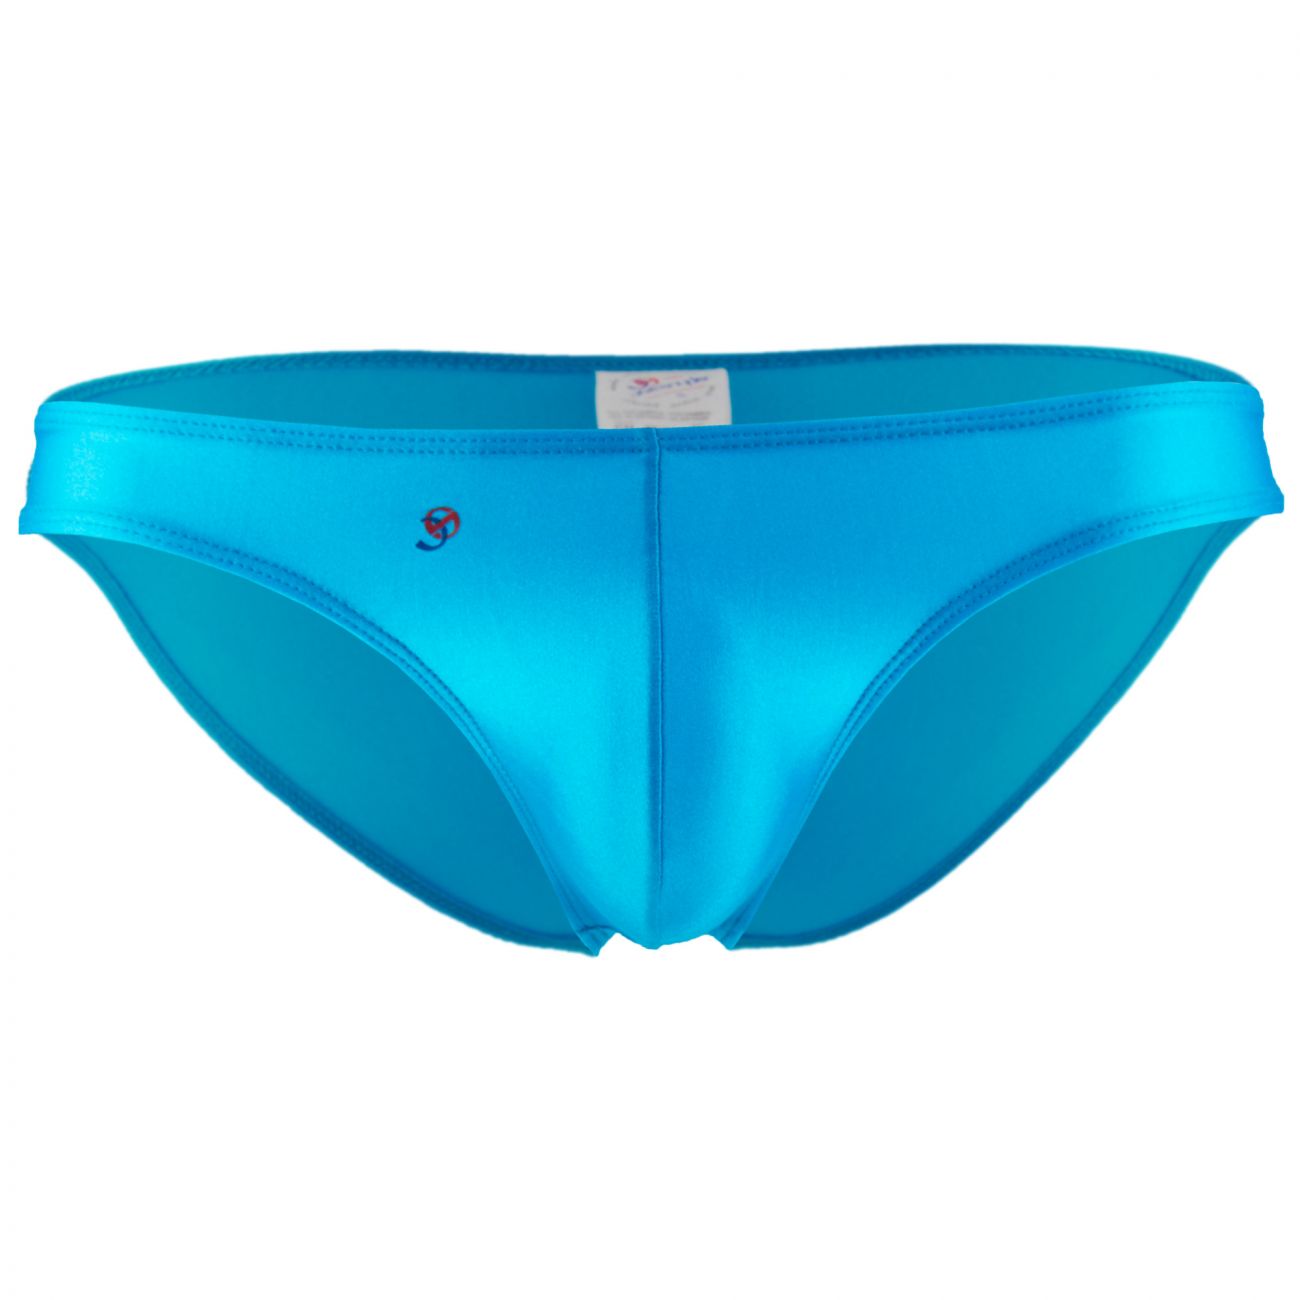 Joe Snyder Bikini Classic New with Tags swimming underwear swimsuit JS01 